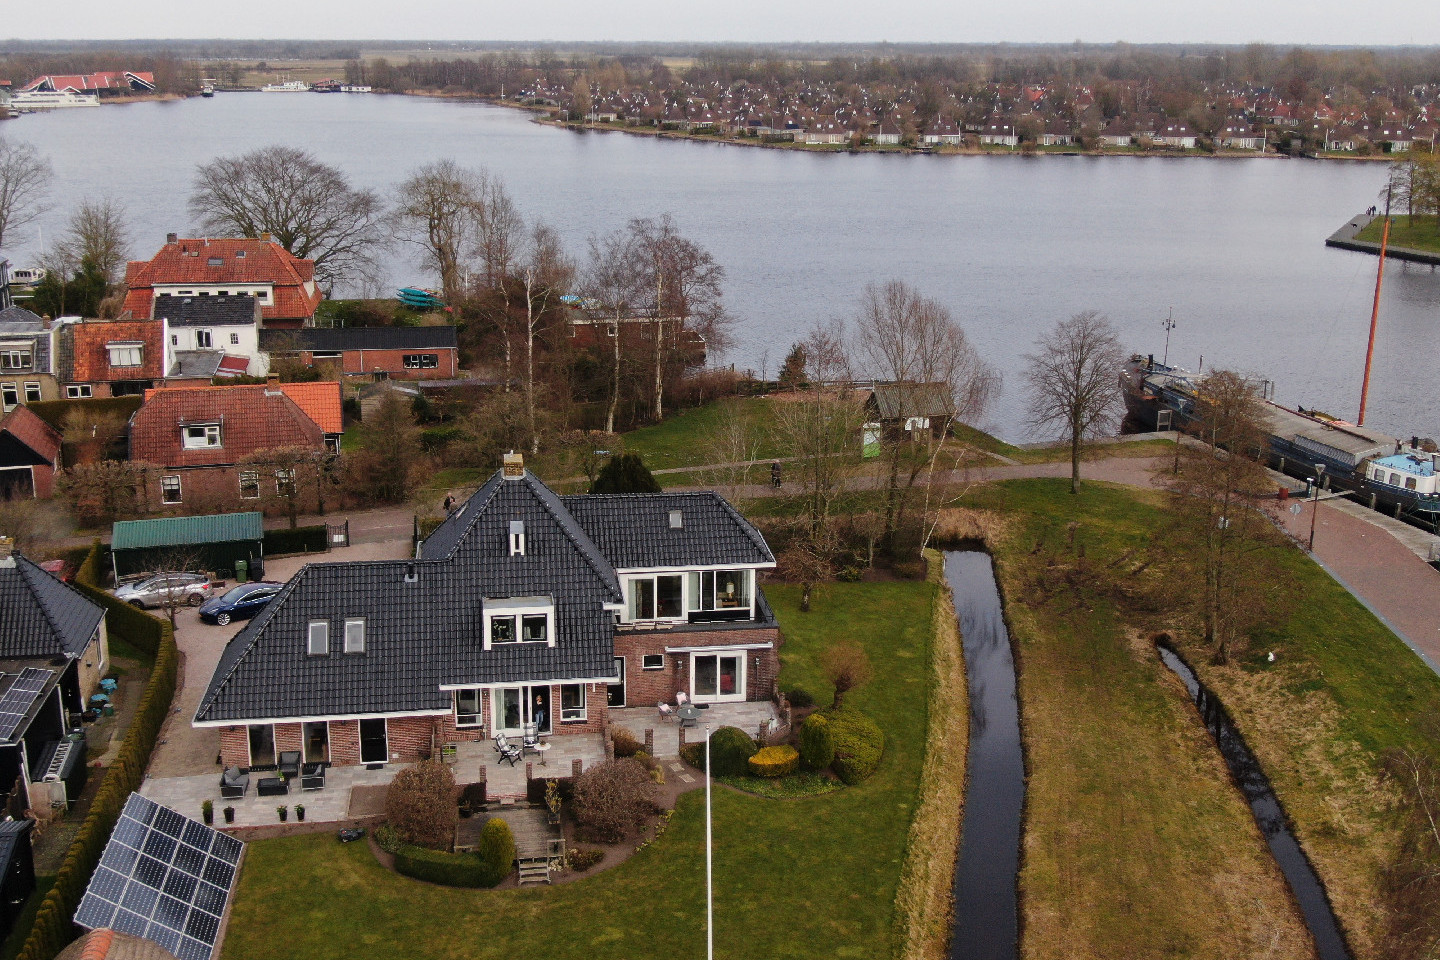 Voorbeeld afbeelding van Bungalow, vakantiehuis Carpe Diem Friesland in Eernewoude / Earnewâld